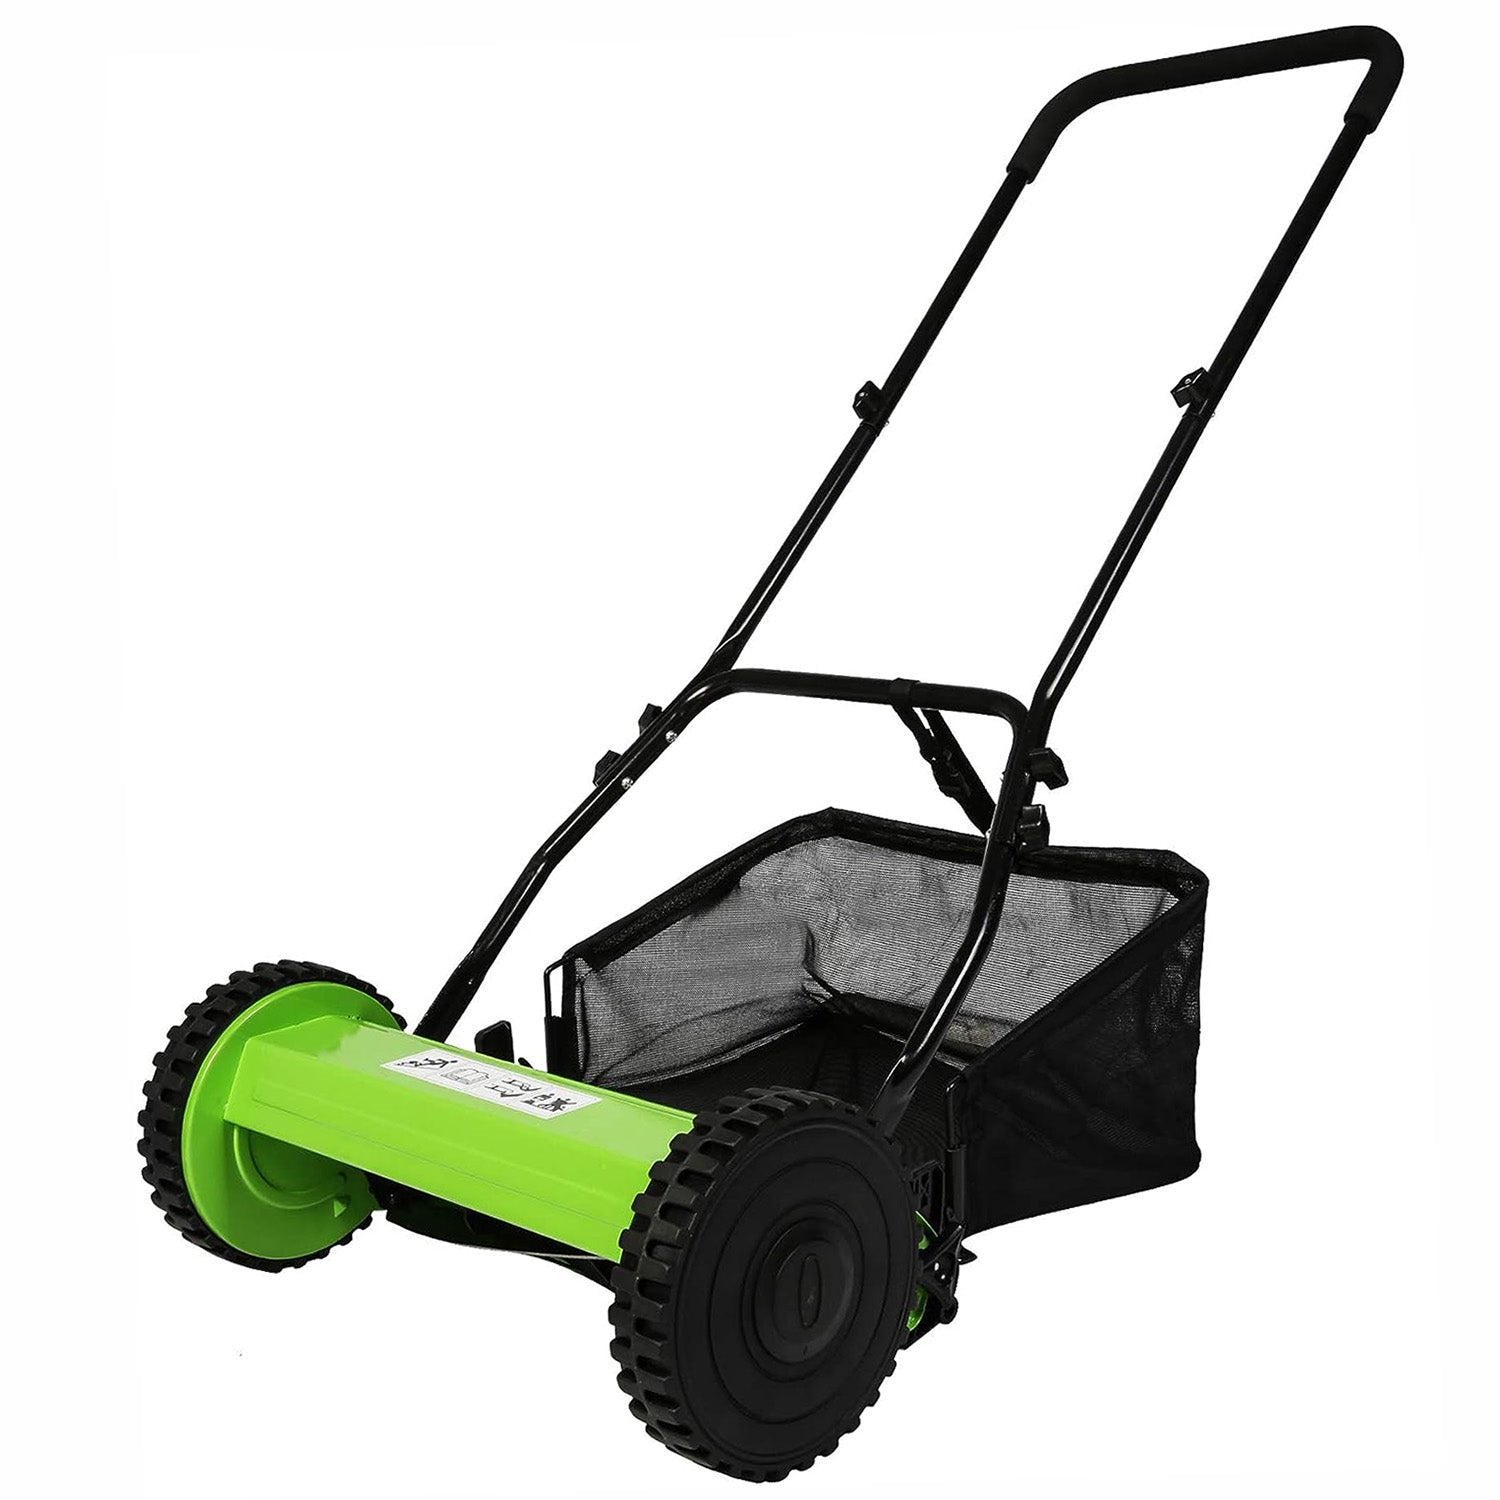 16" Push Cordless Lawn Mower 5-Blade Manual Walk-behind Mower with Detachable Grass Catcher, 2 Wheels